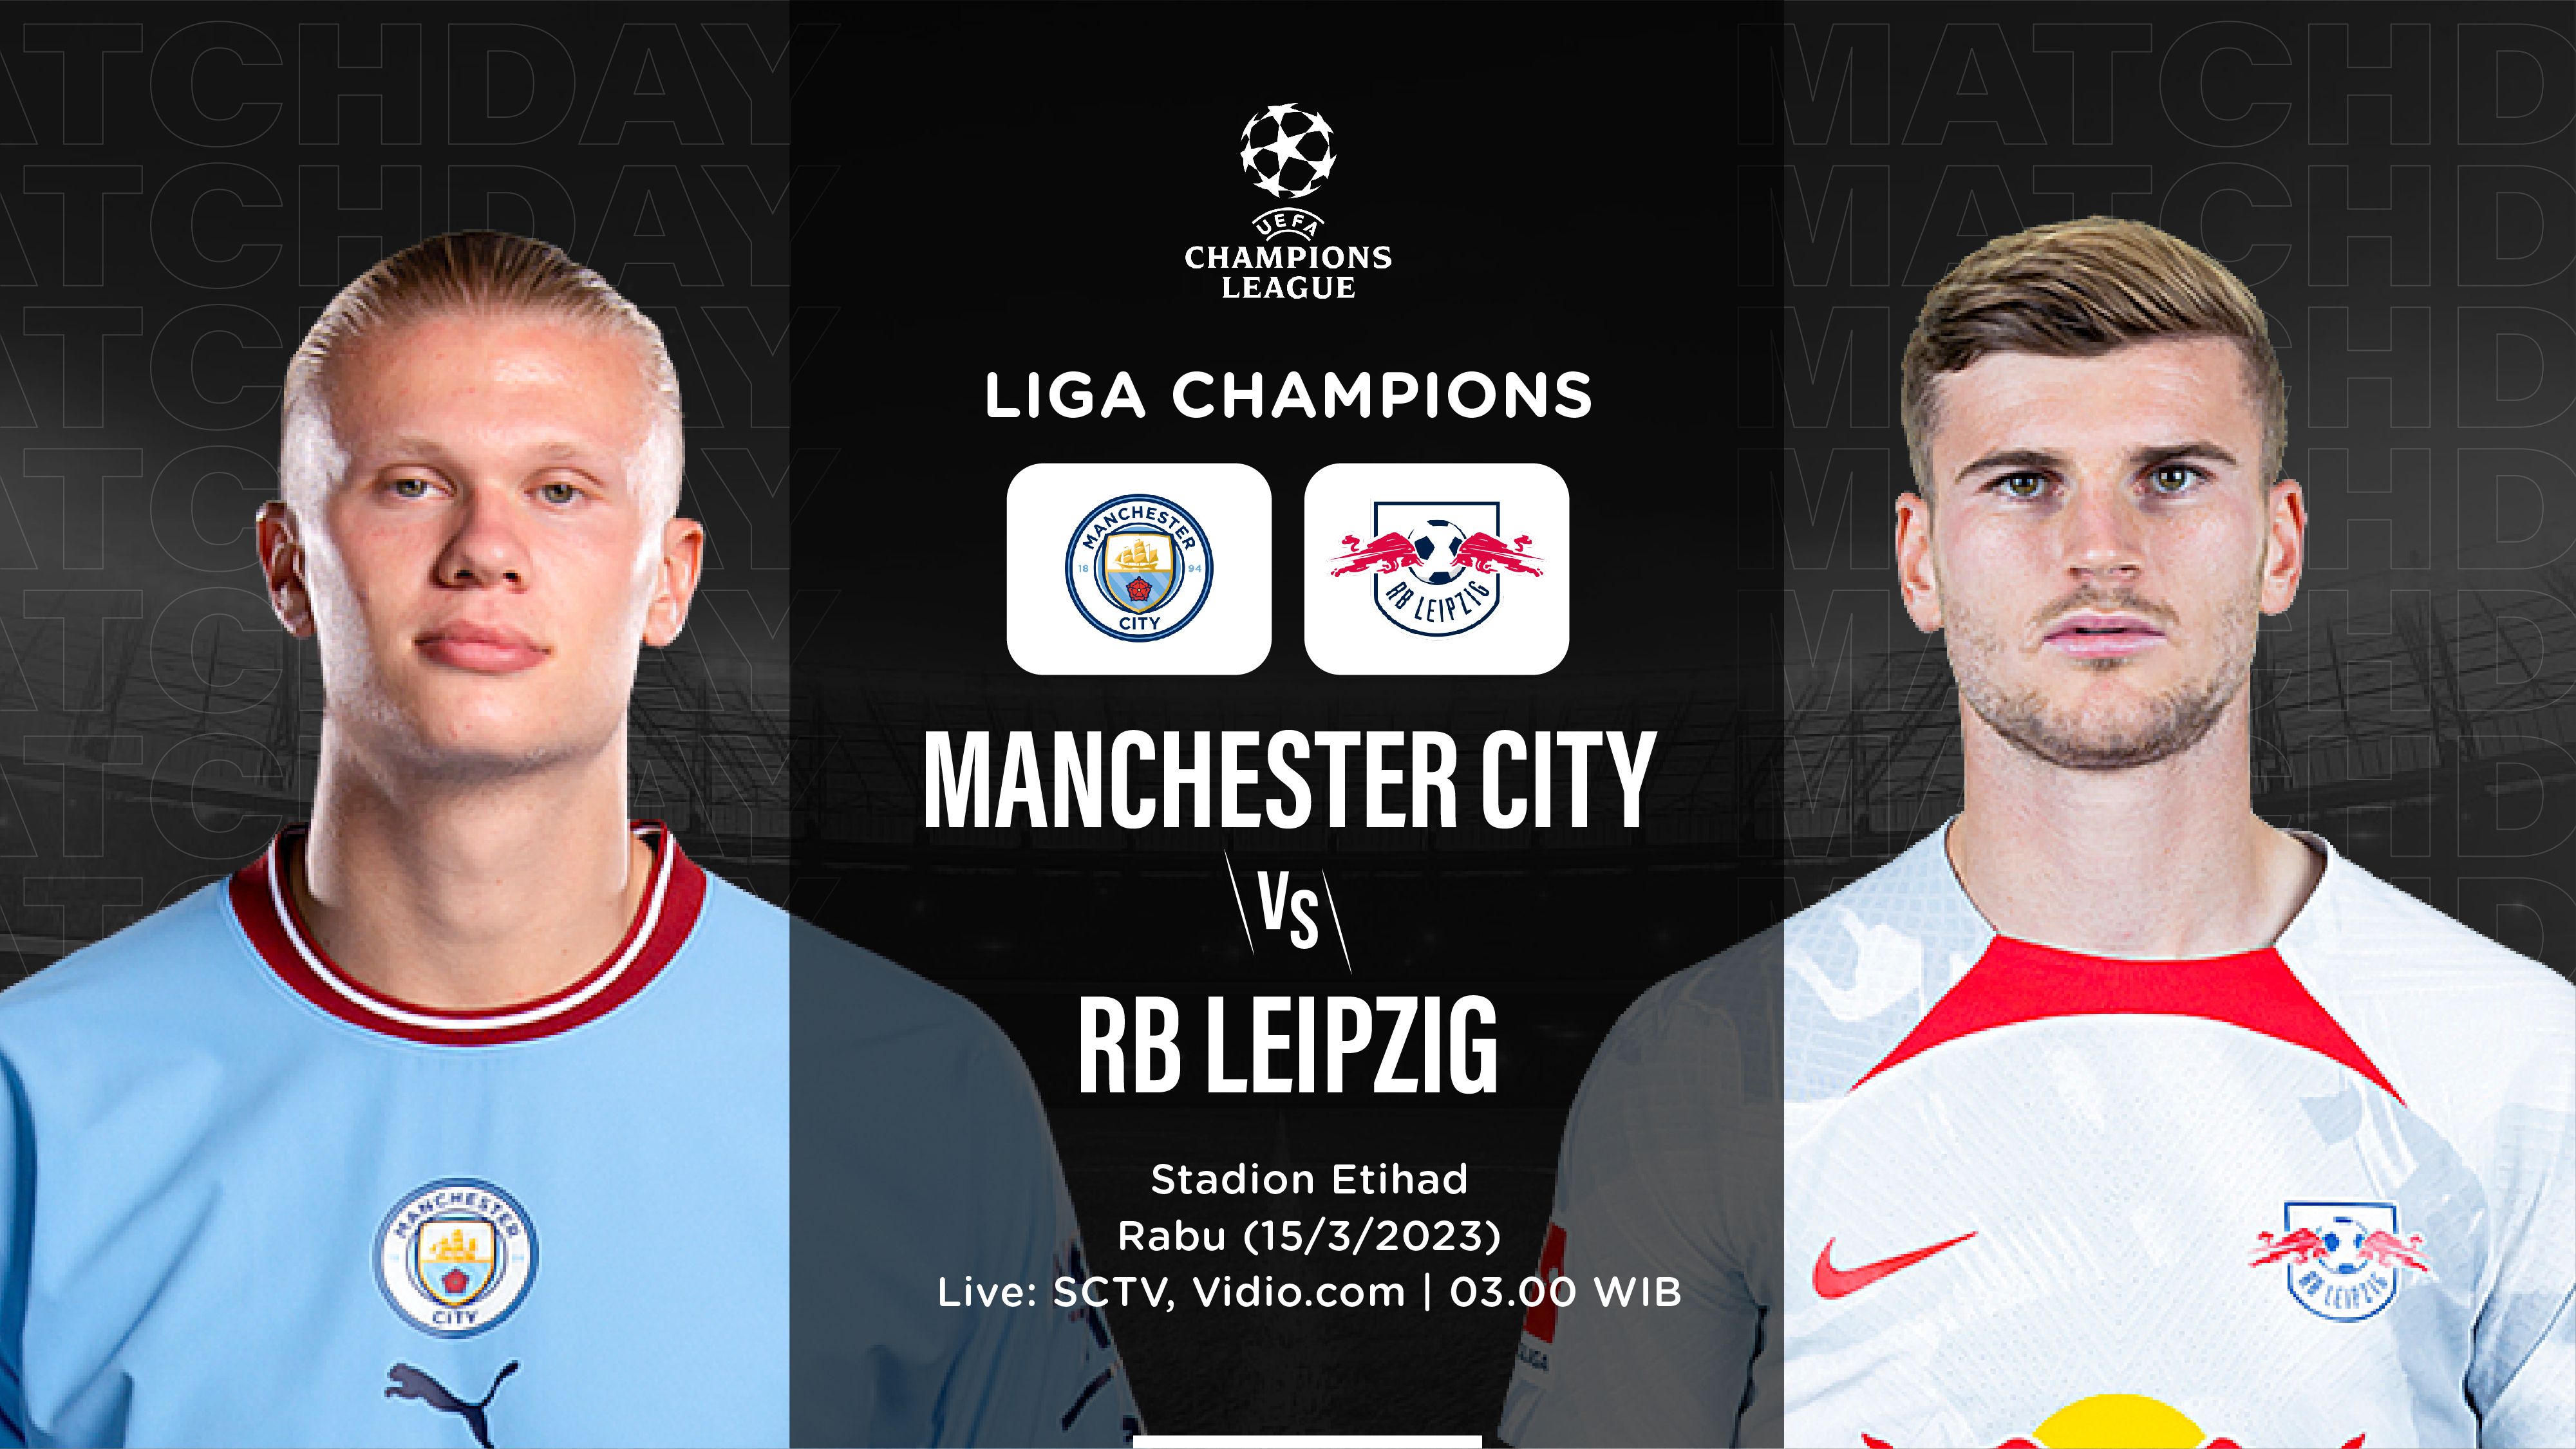 Laga Manchester City vs RB Leipzig di Liga Champions (Hendy/Skor.id)